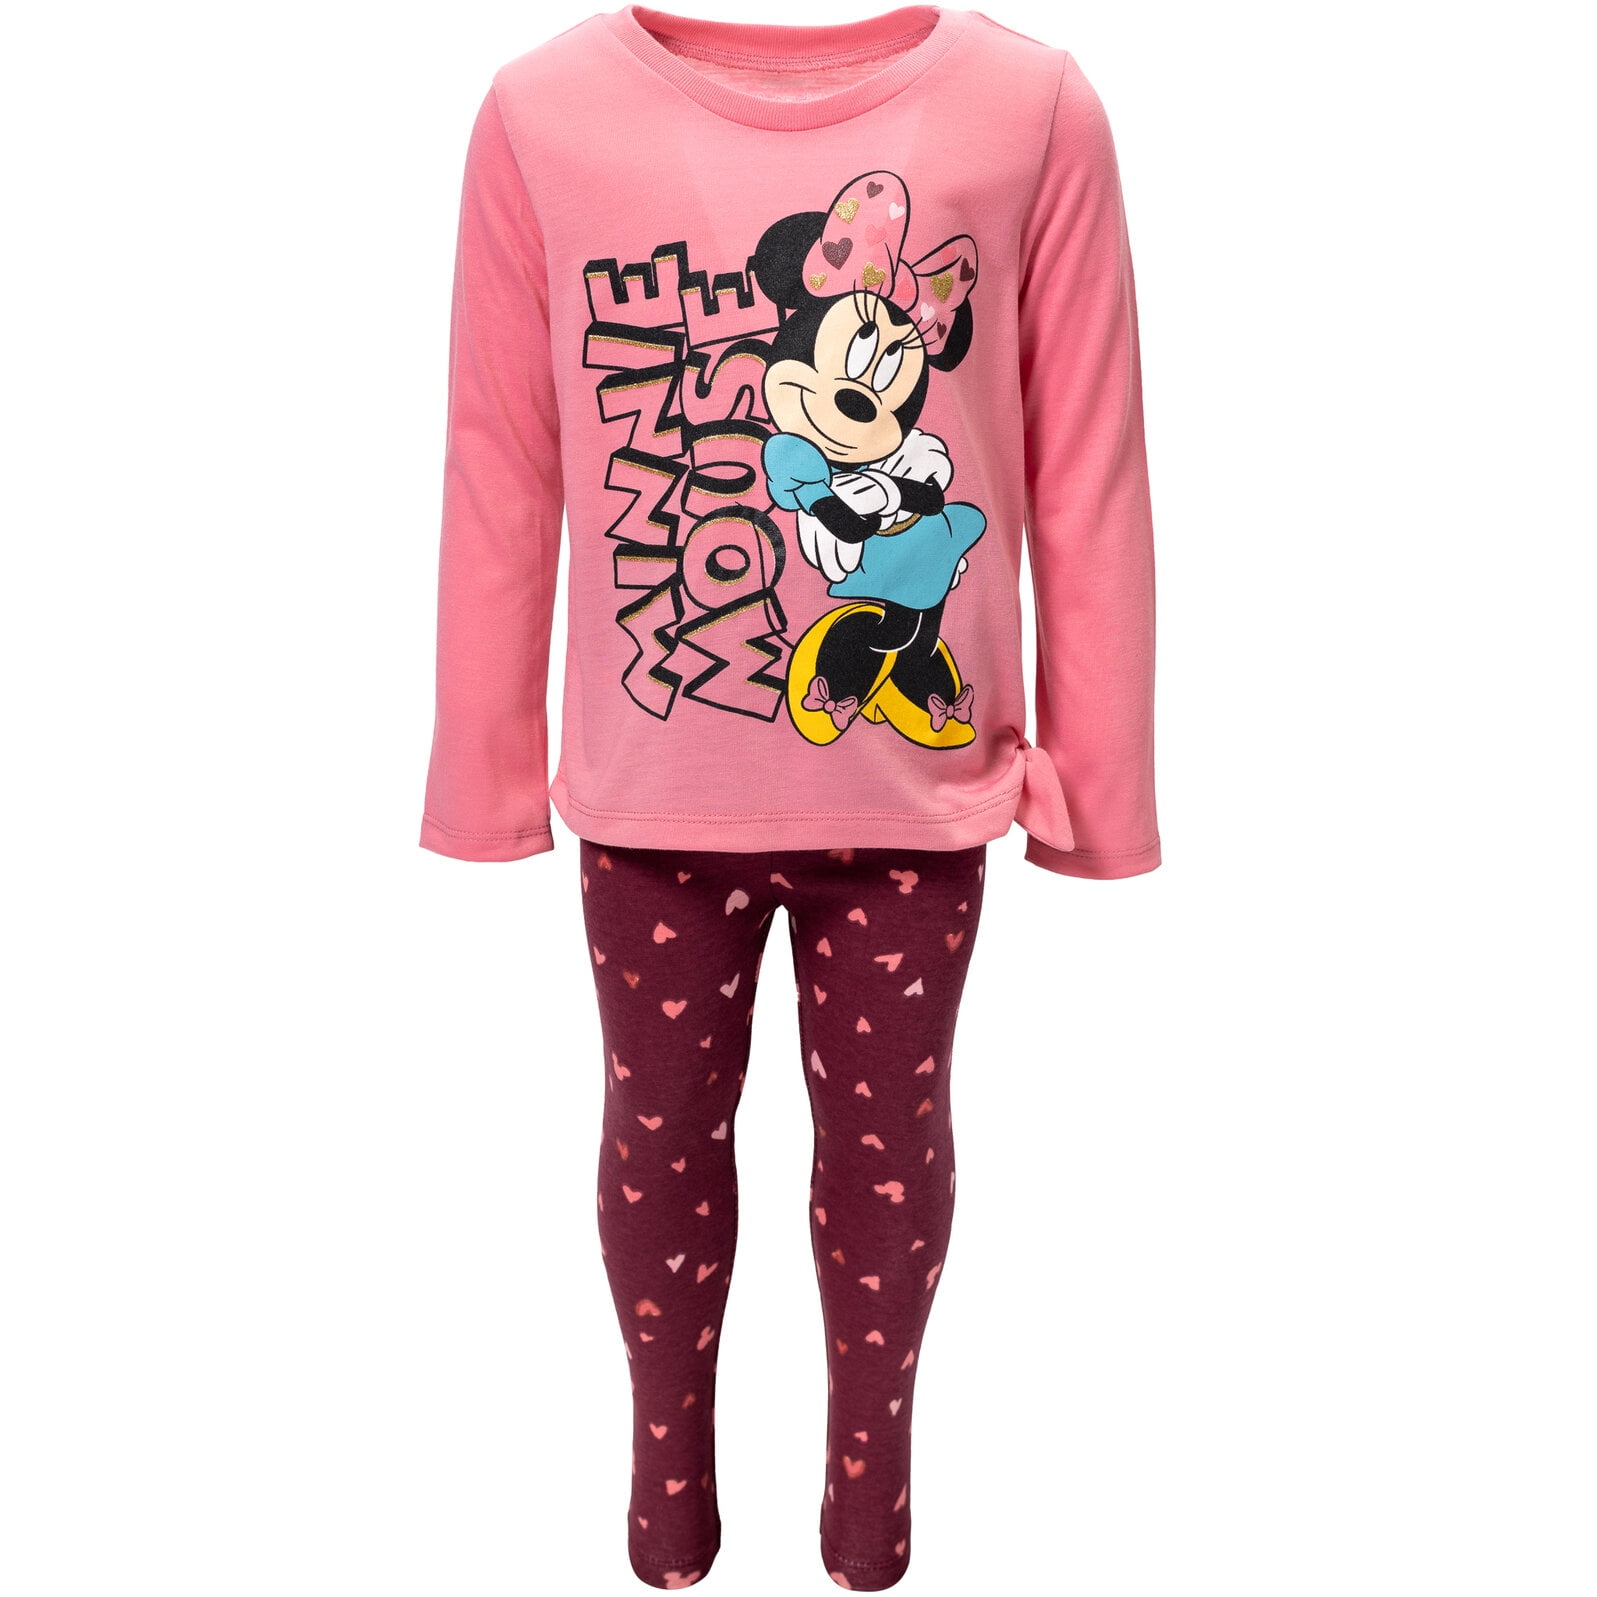 8 EUC NWT Size 7 8 girls pj tops leggings Disney Minnie Mouse